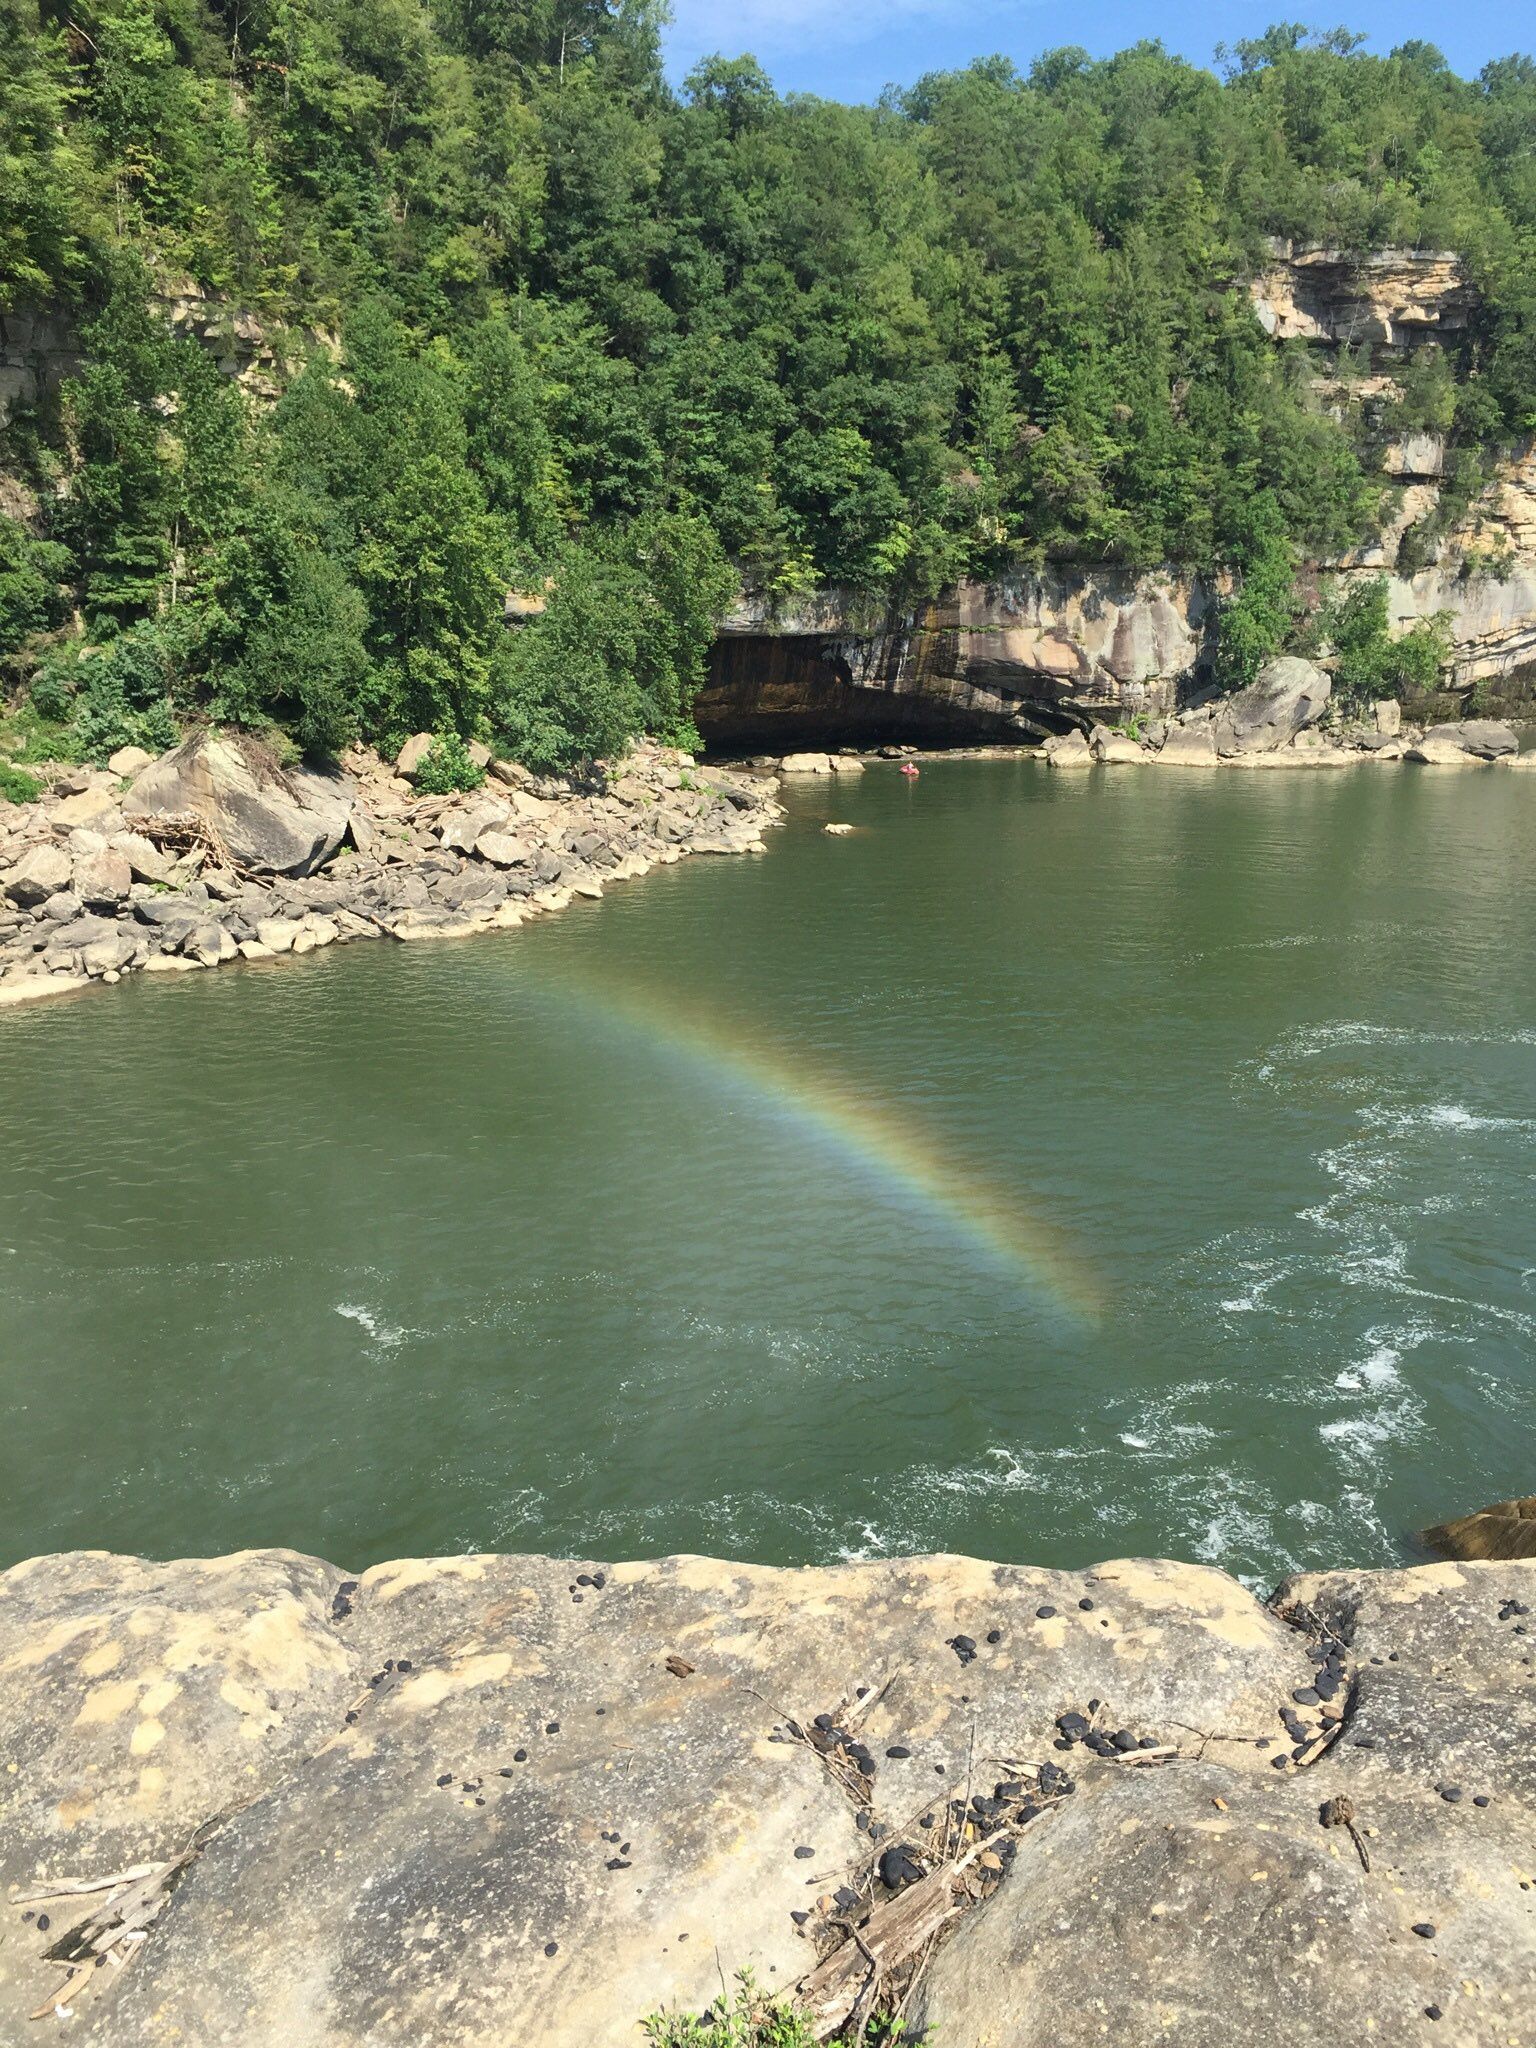 Small rainbow downstream